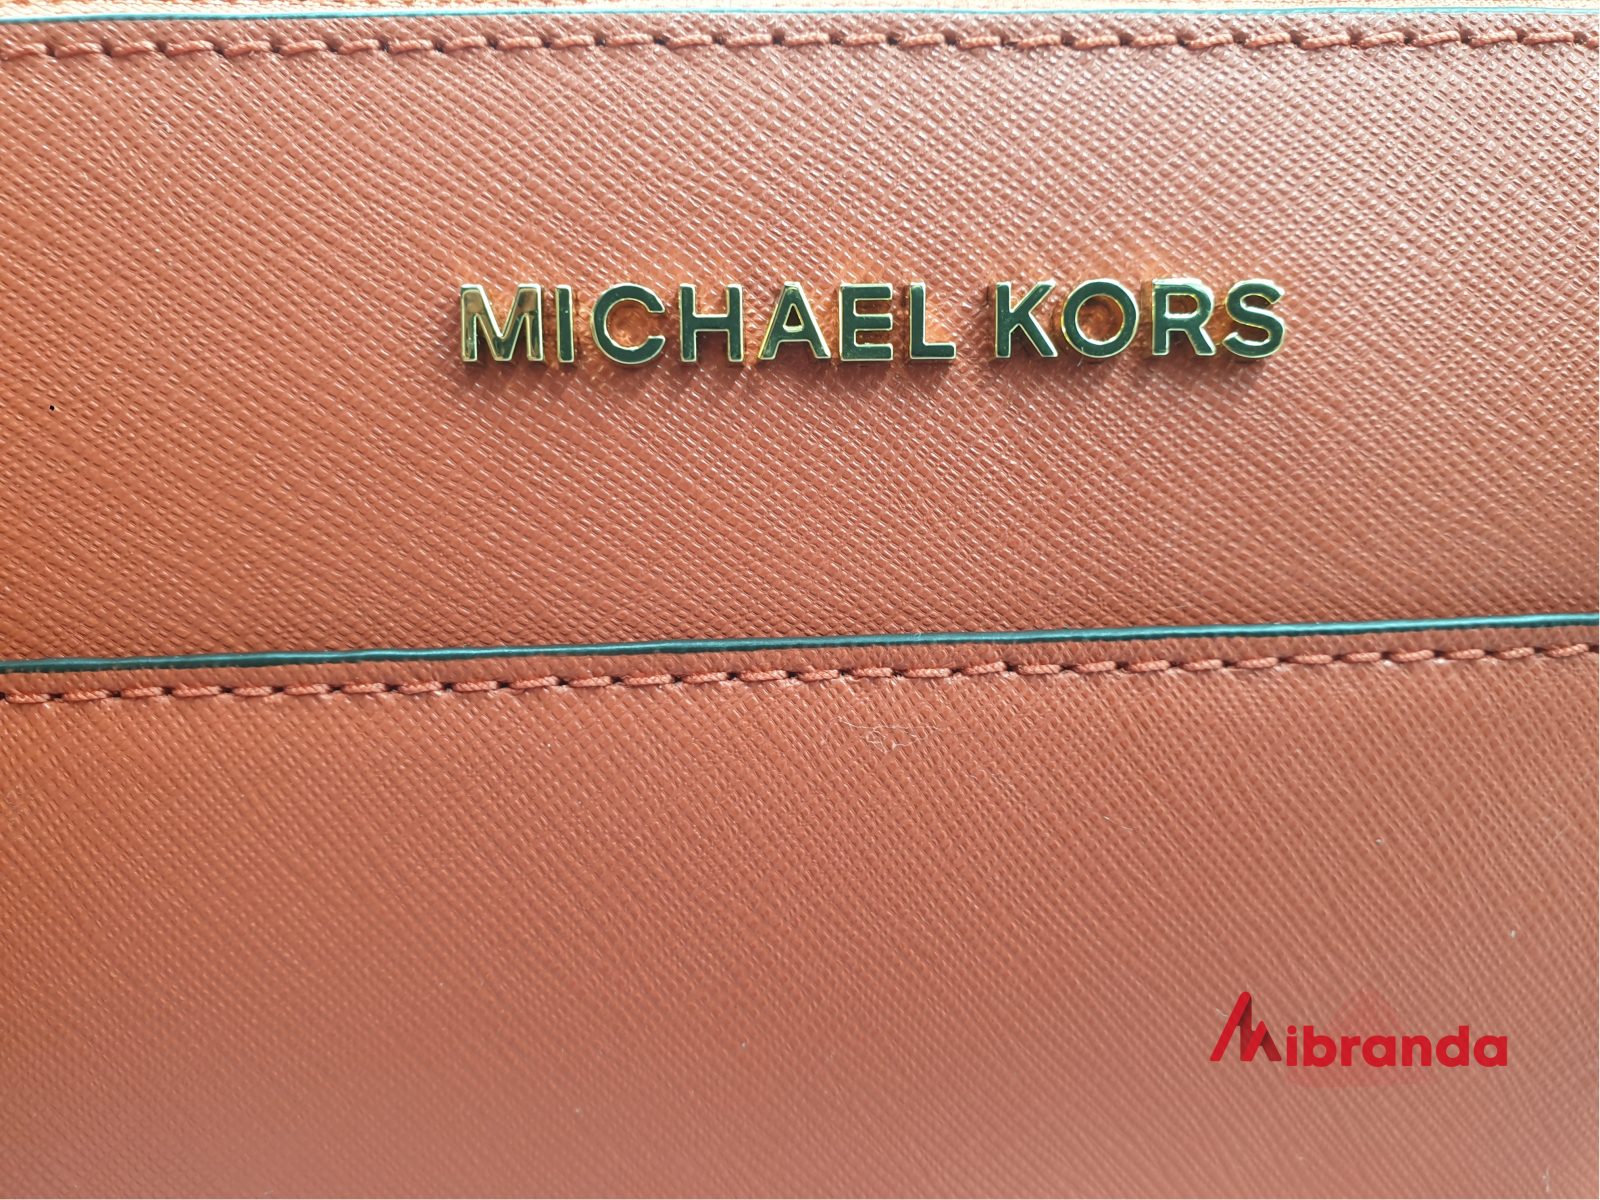 ¿Cómo diferenciar un bolso de Michael Kors verdadero de uno falso?